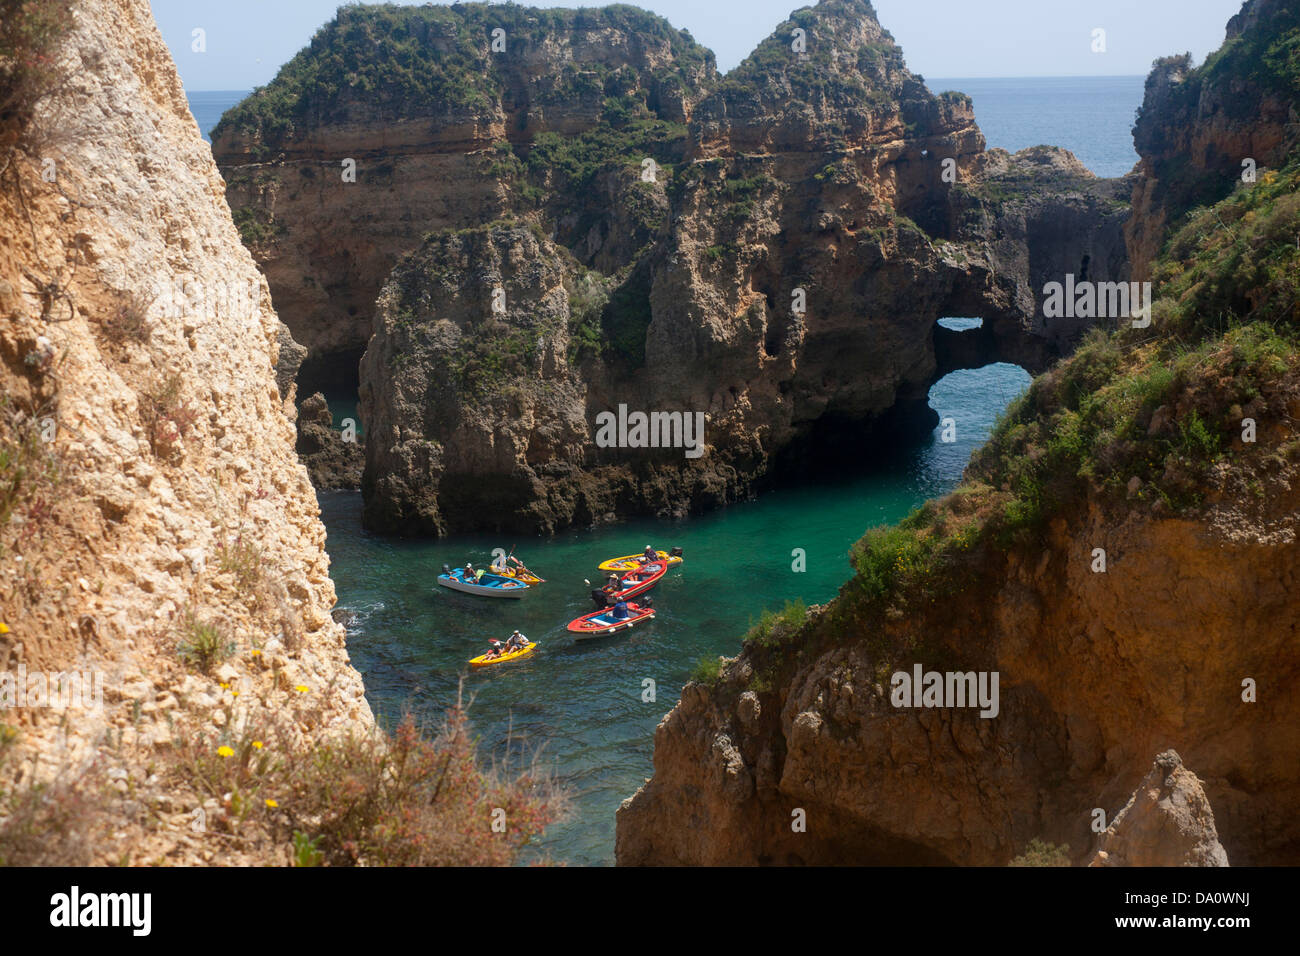 Boat trip in cove surrounded by typical unusual Algarve rock formations Ponta da Piedade Lagos Algarve Portugal Stock Photo